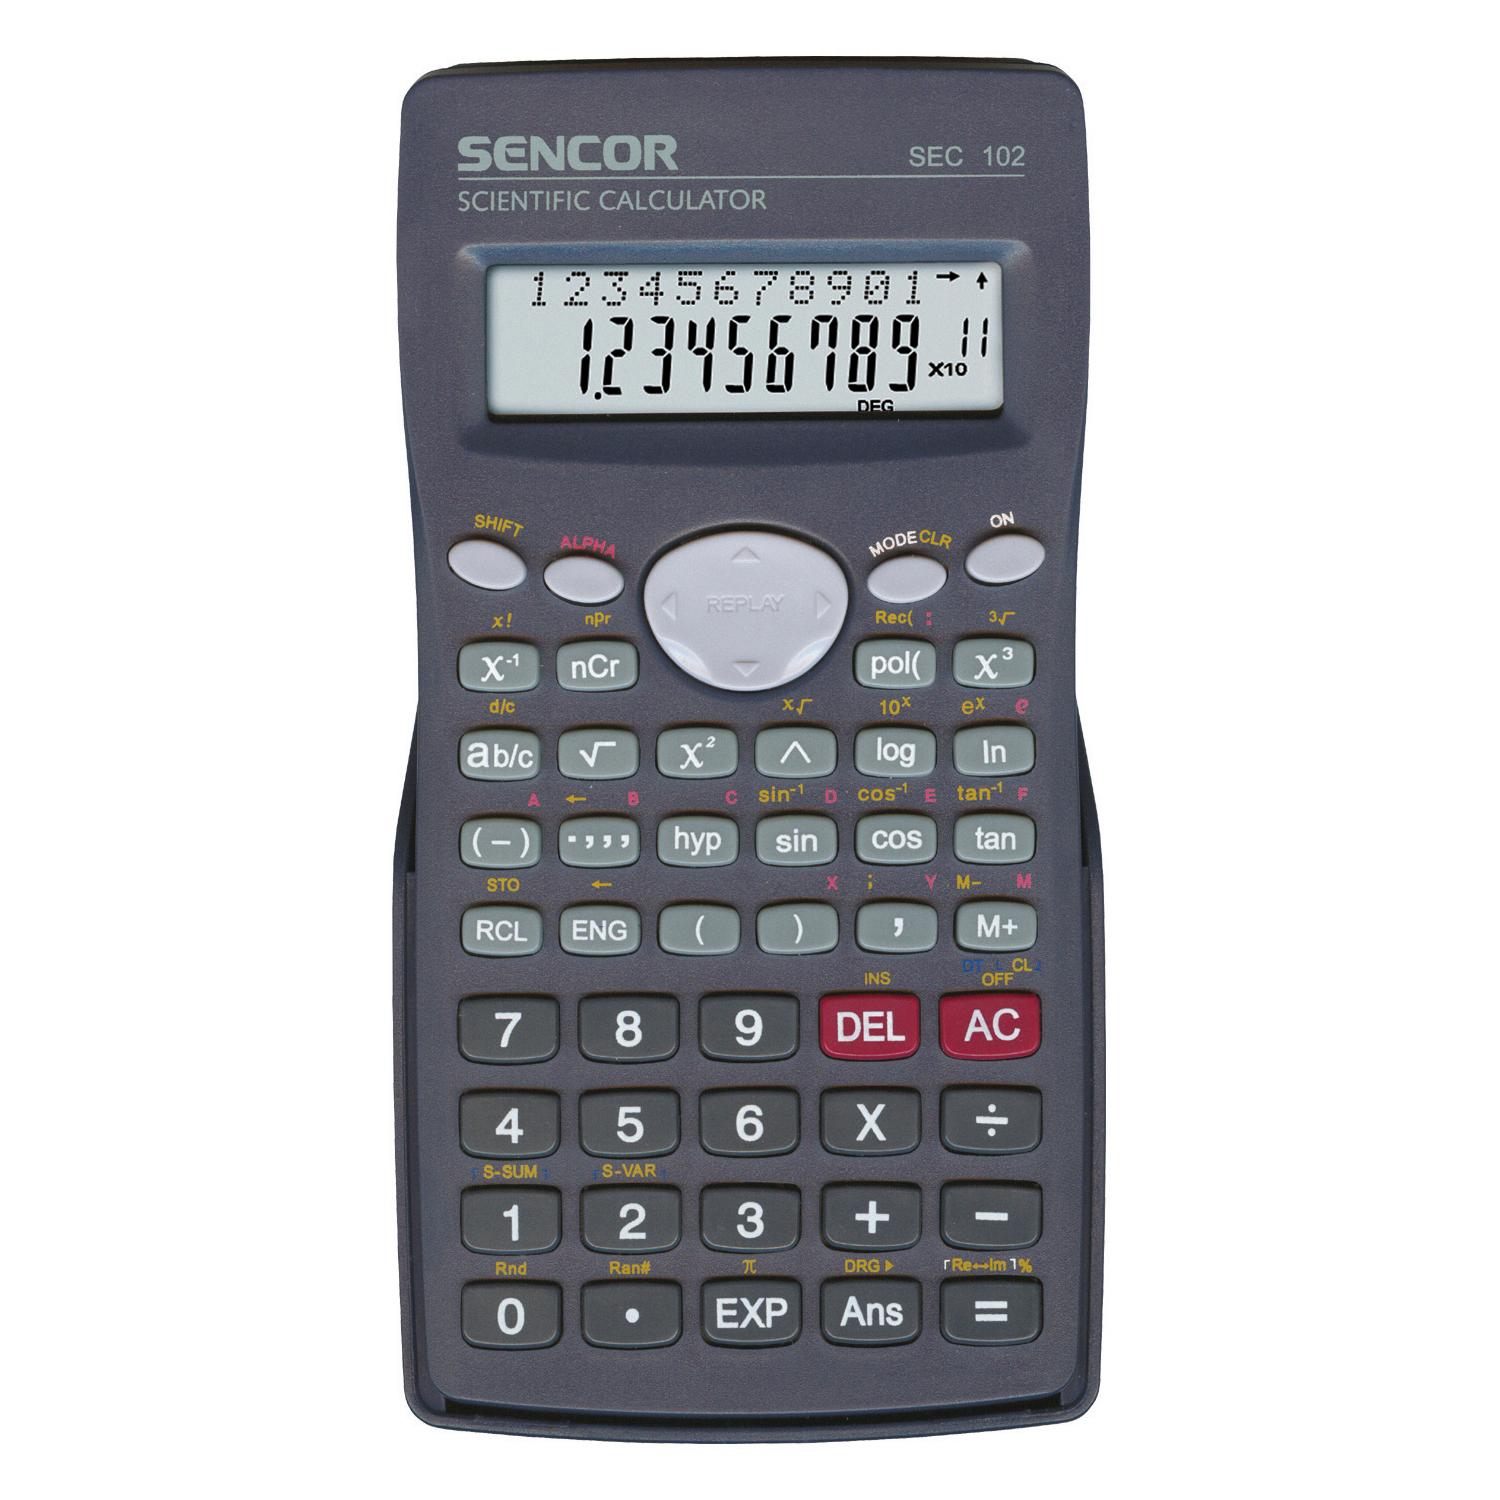 secant on calculator